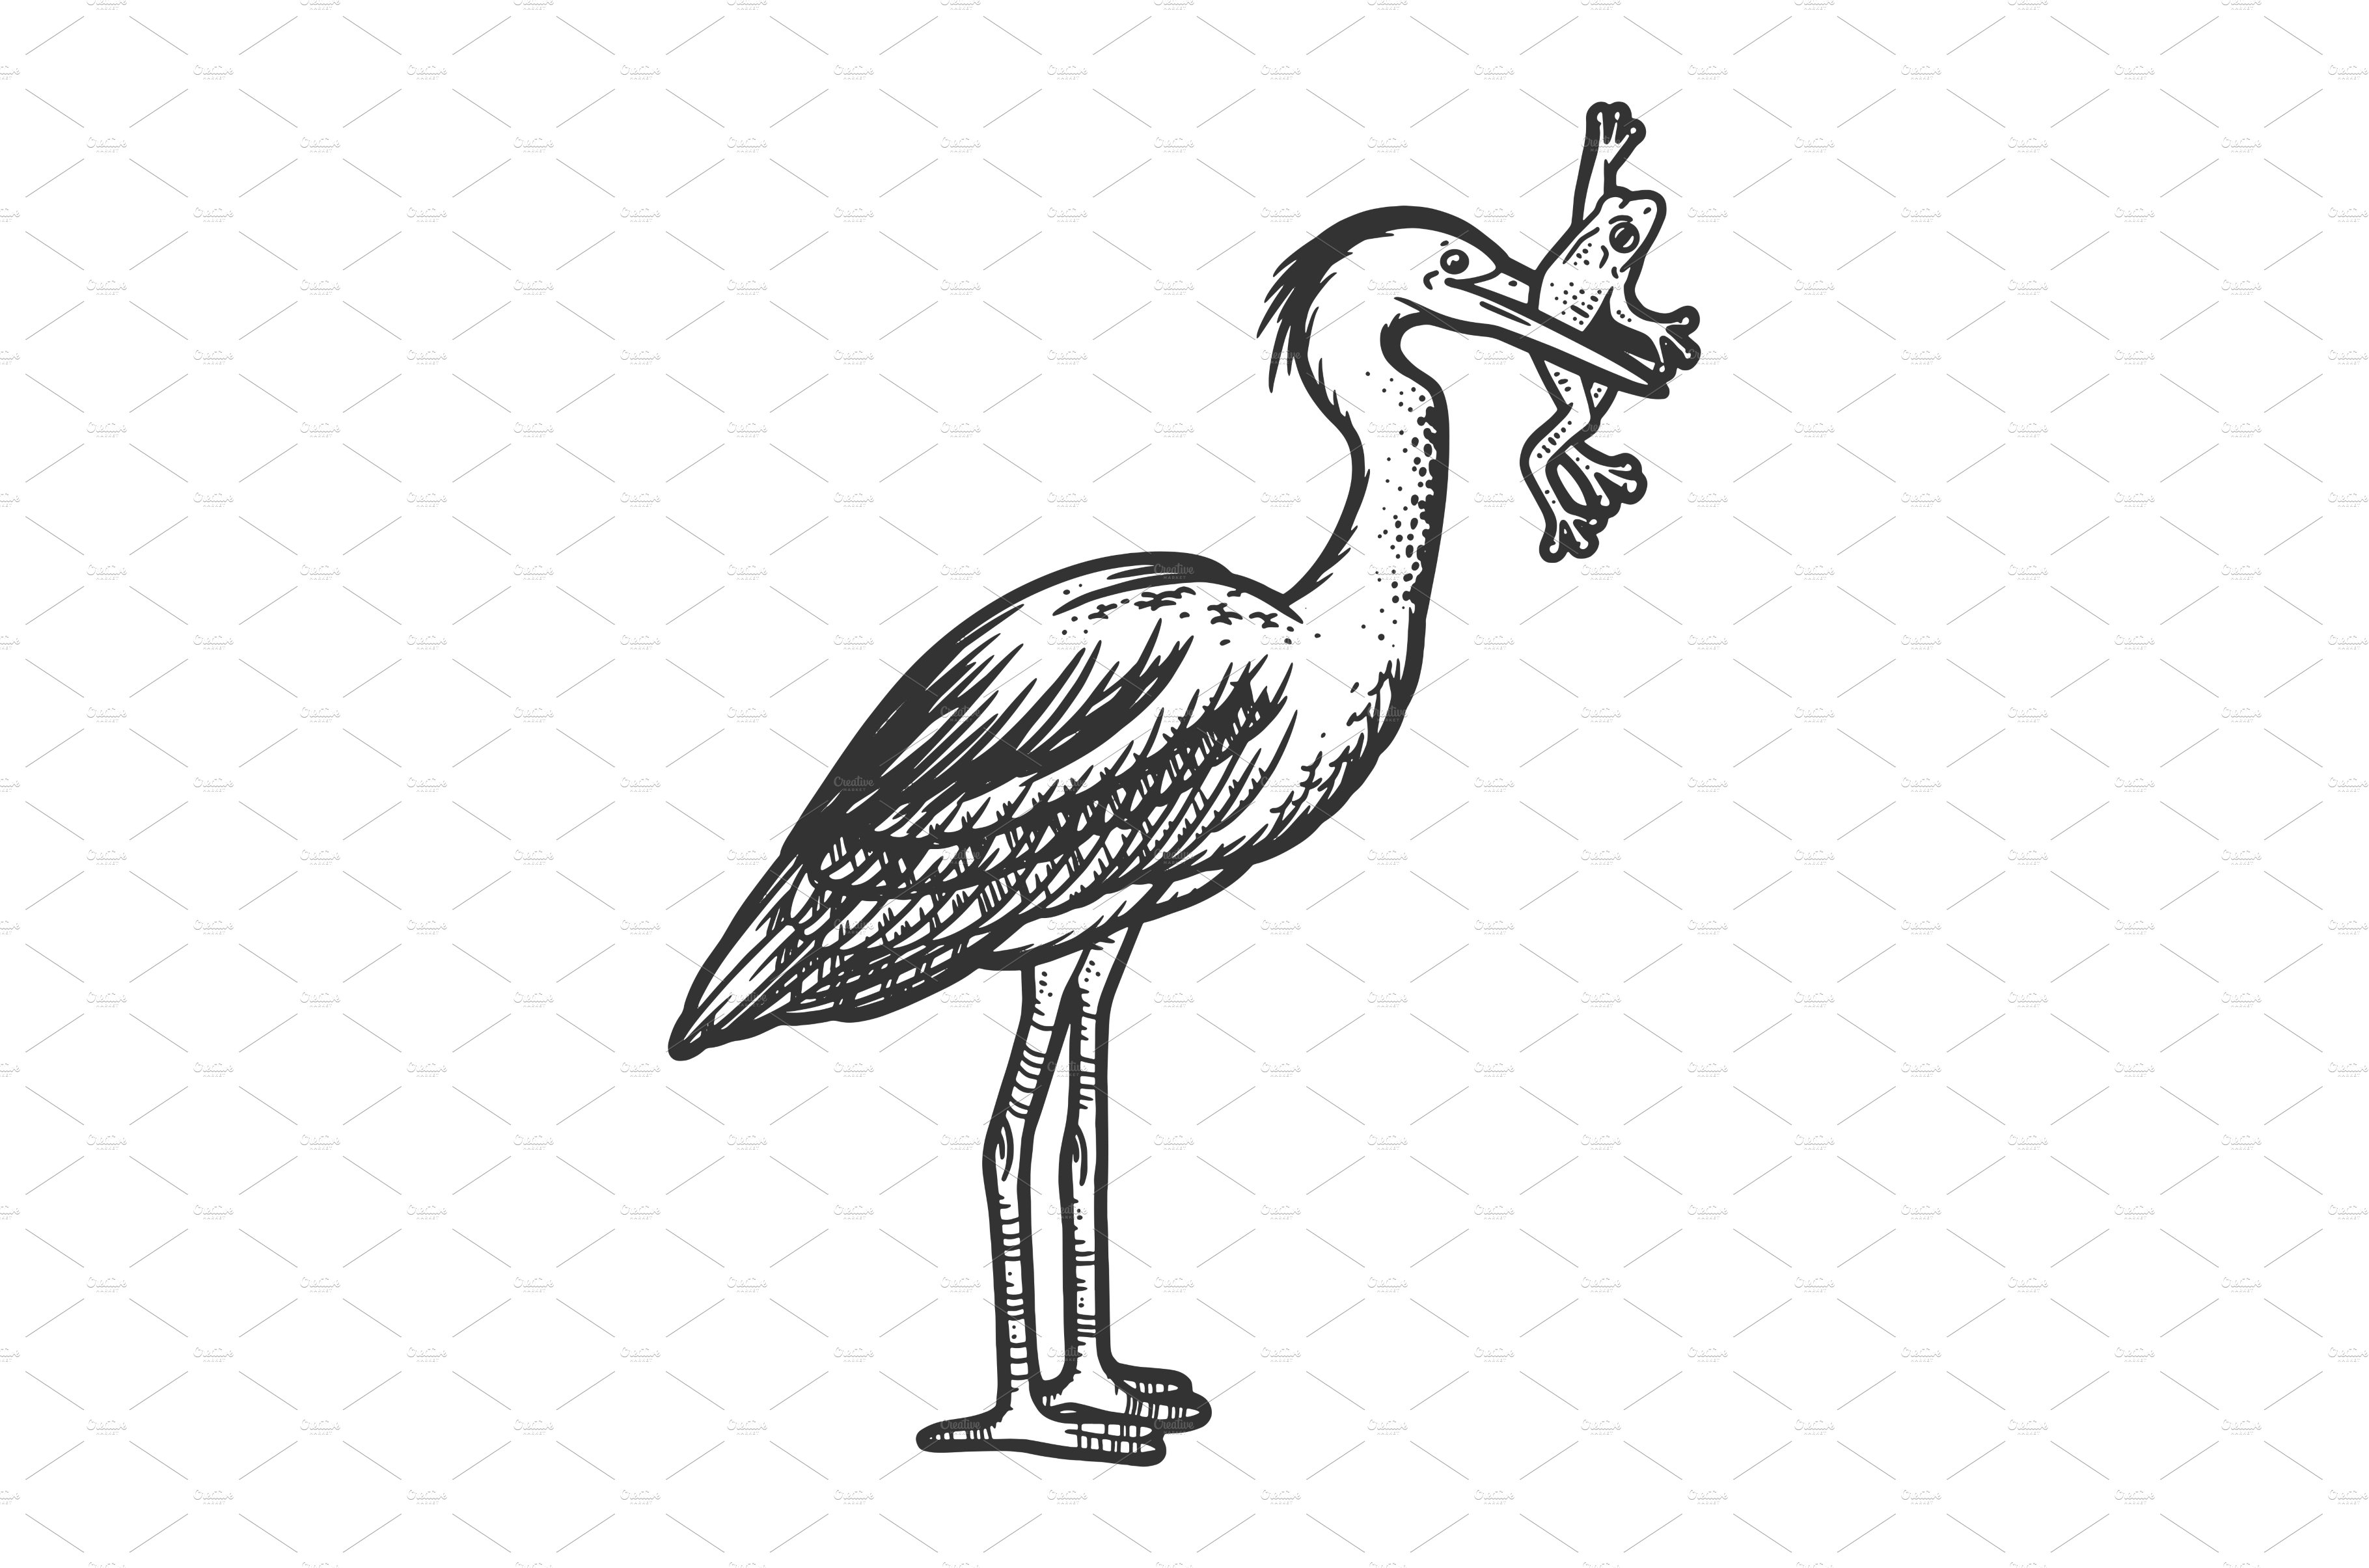 heron bird with frog line art sketch cover image.